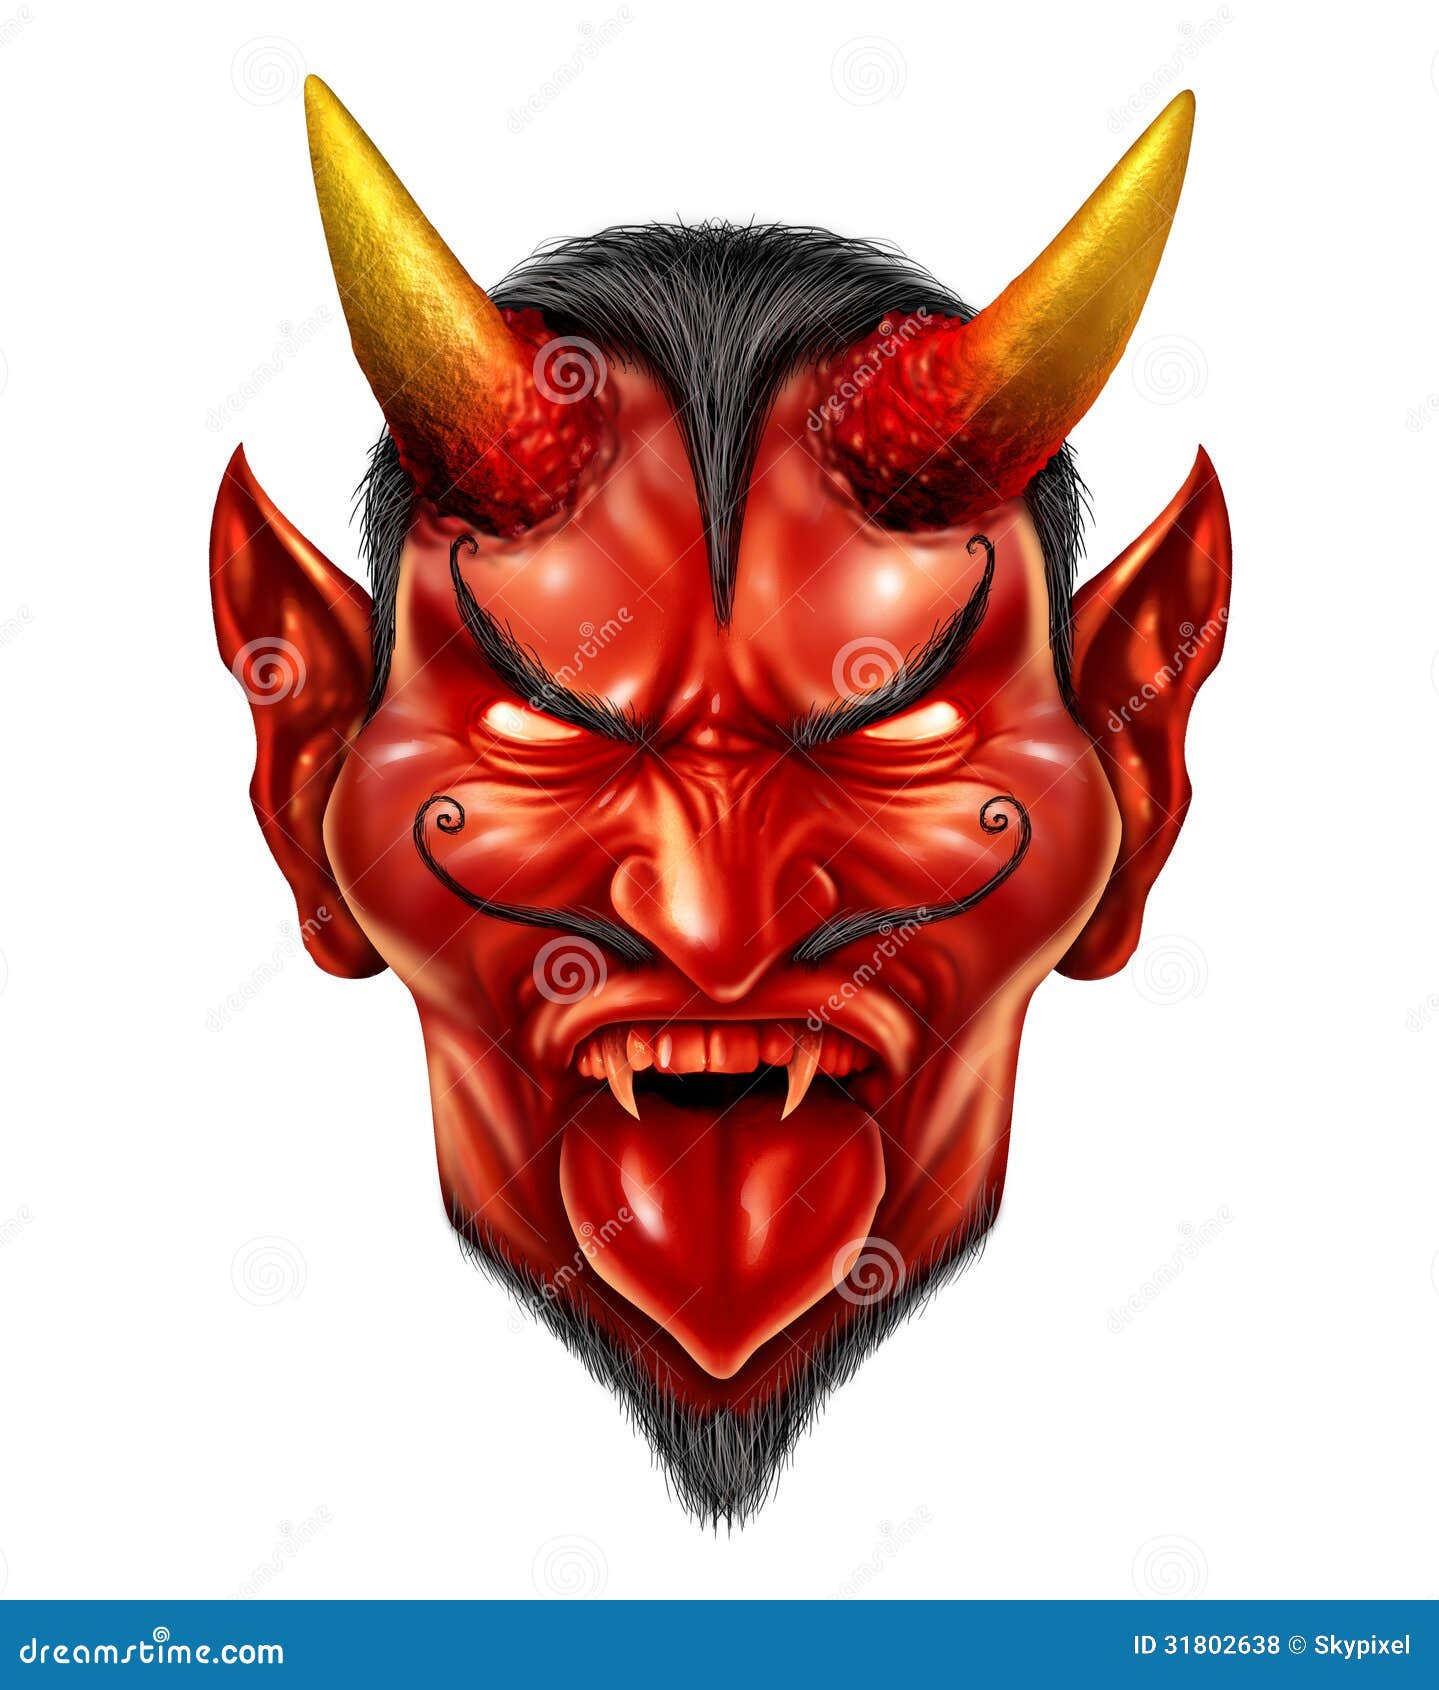 devil demon